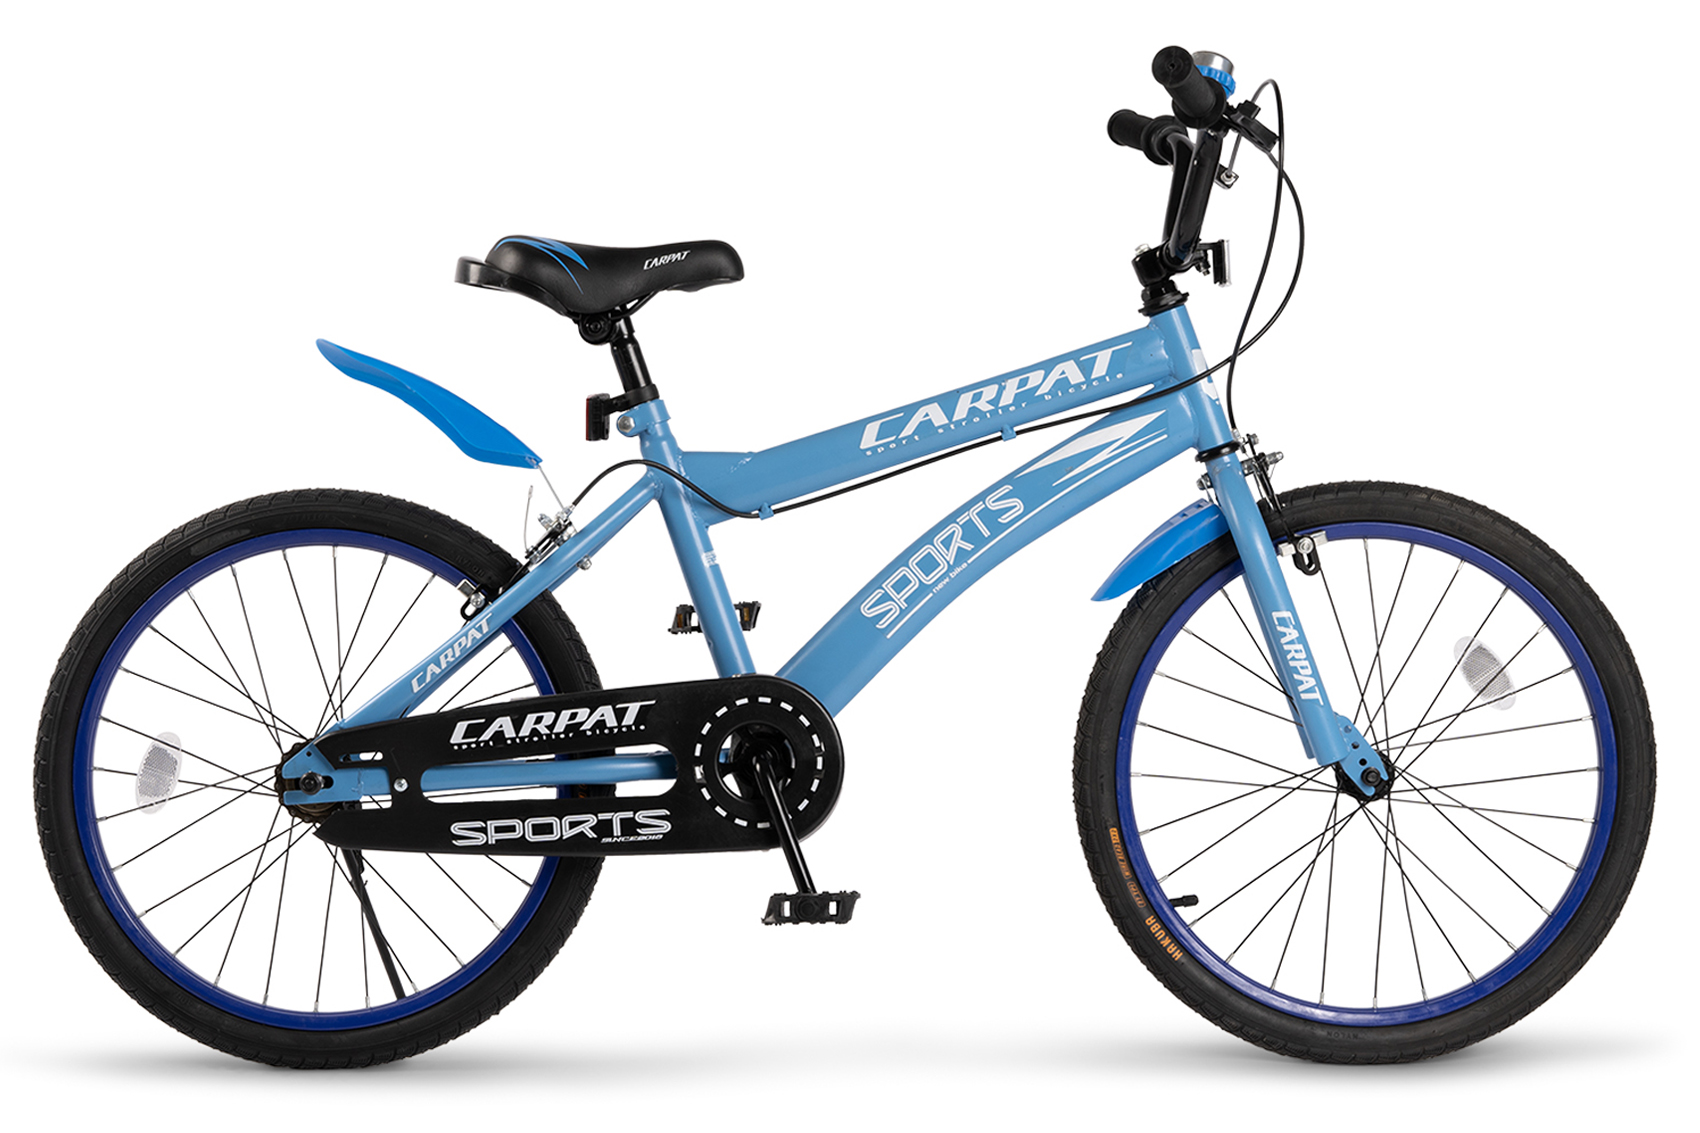 BICICLETE PENTRU COPII - Bicicleta Copii 7-10 ani Carpat C2001RA 20", Albastru/Alb ( Janta albastra ), https:carpatsport.ro